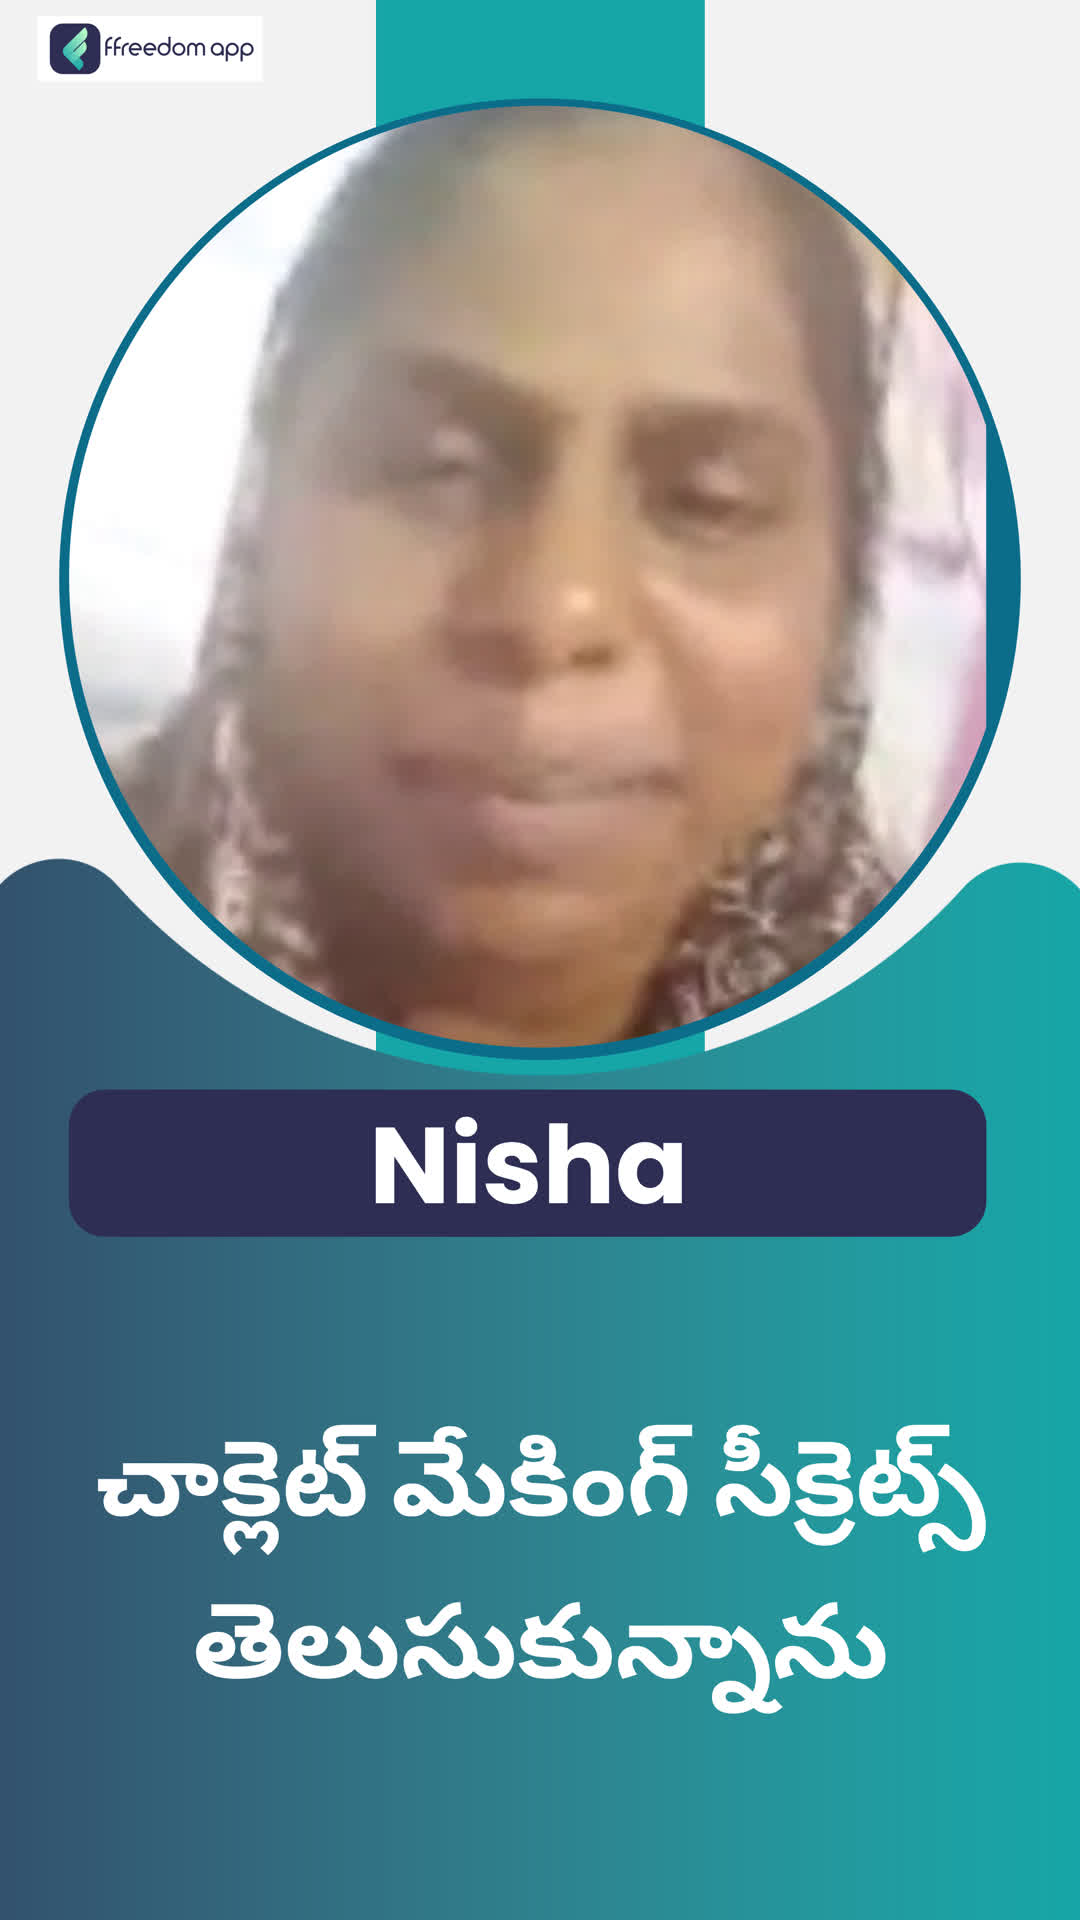 NISHA's Honest Review of ffreedom app - Chittoor ,Andhra Pradesh